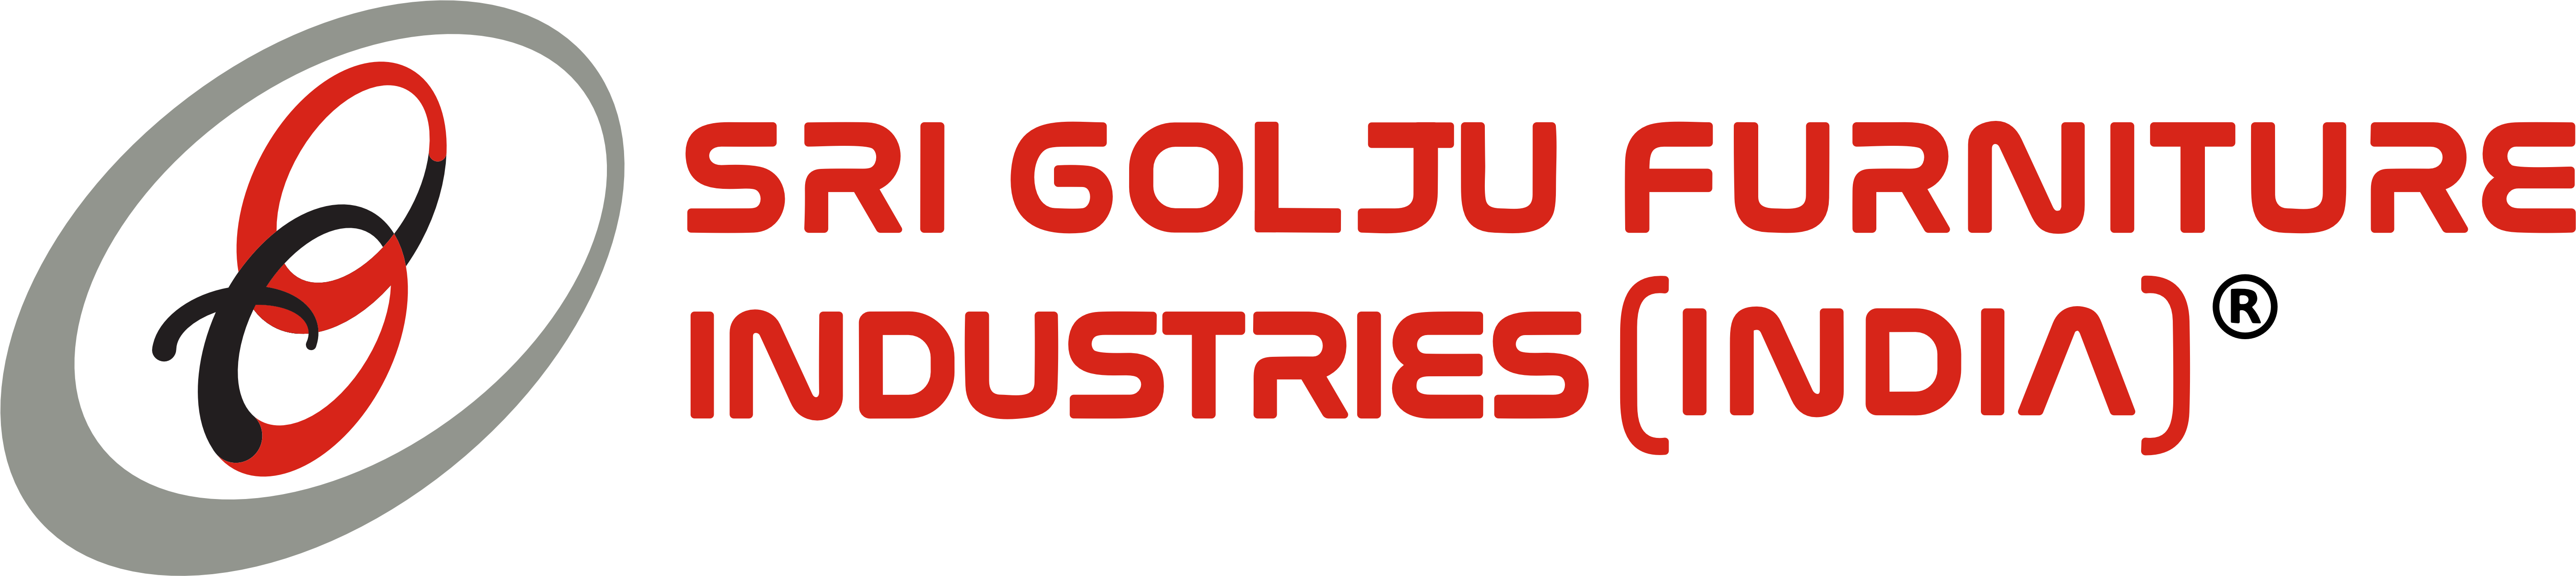 Sri Golju Furniture Industries